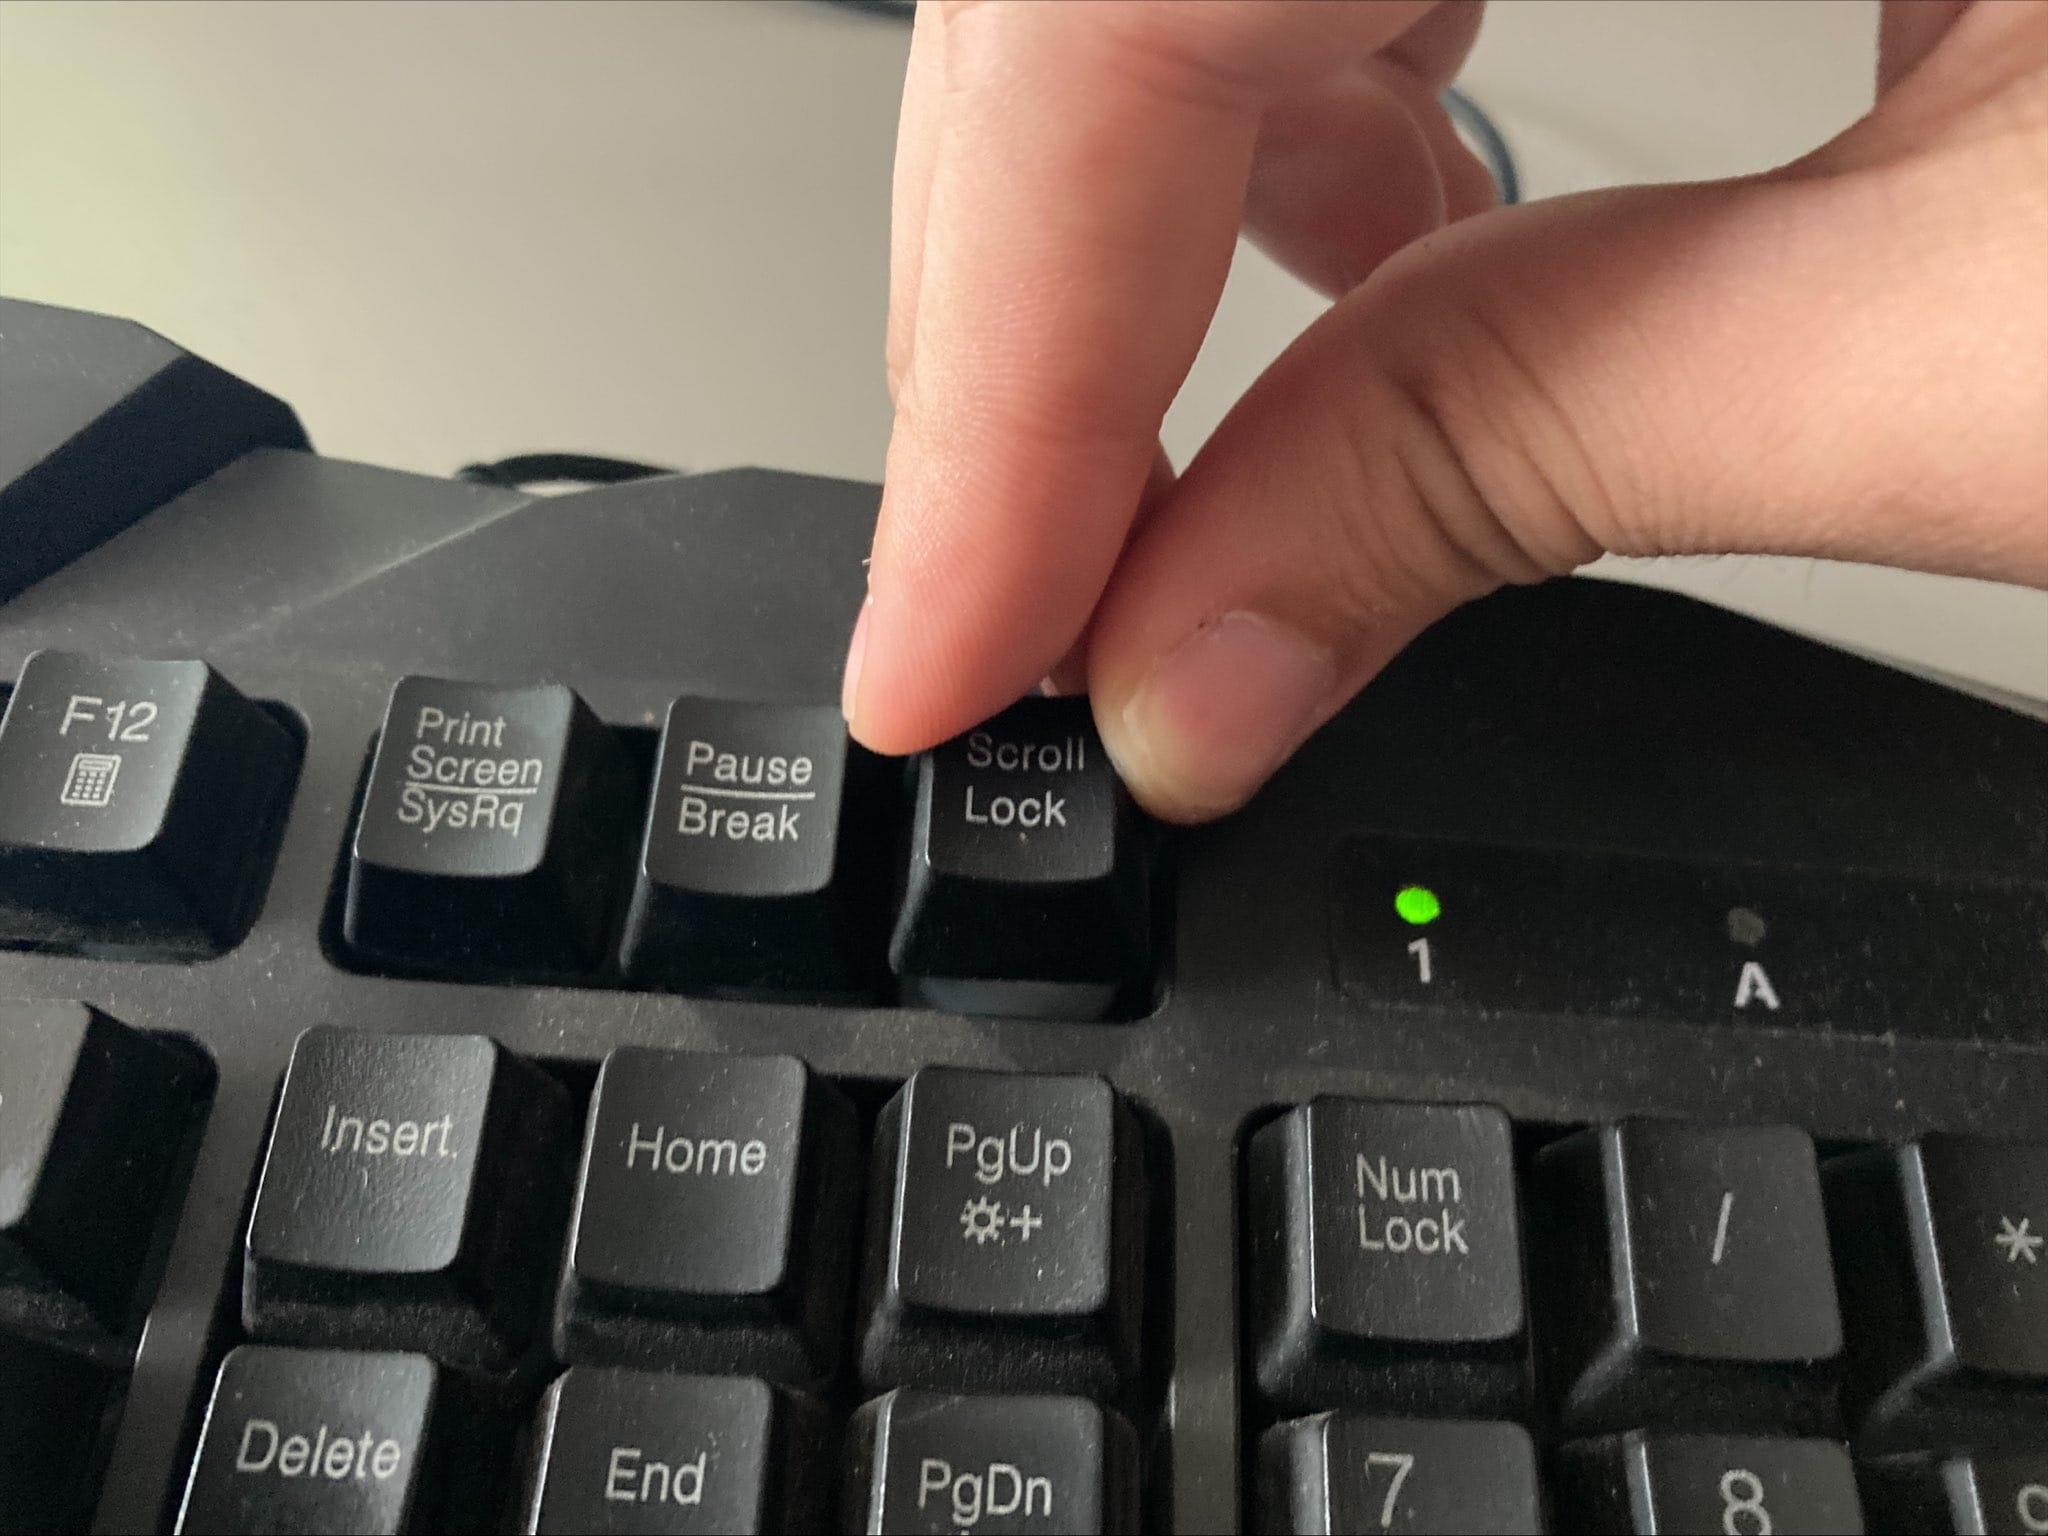 Retirando as teclas do teclado para limpar